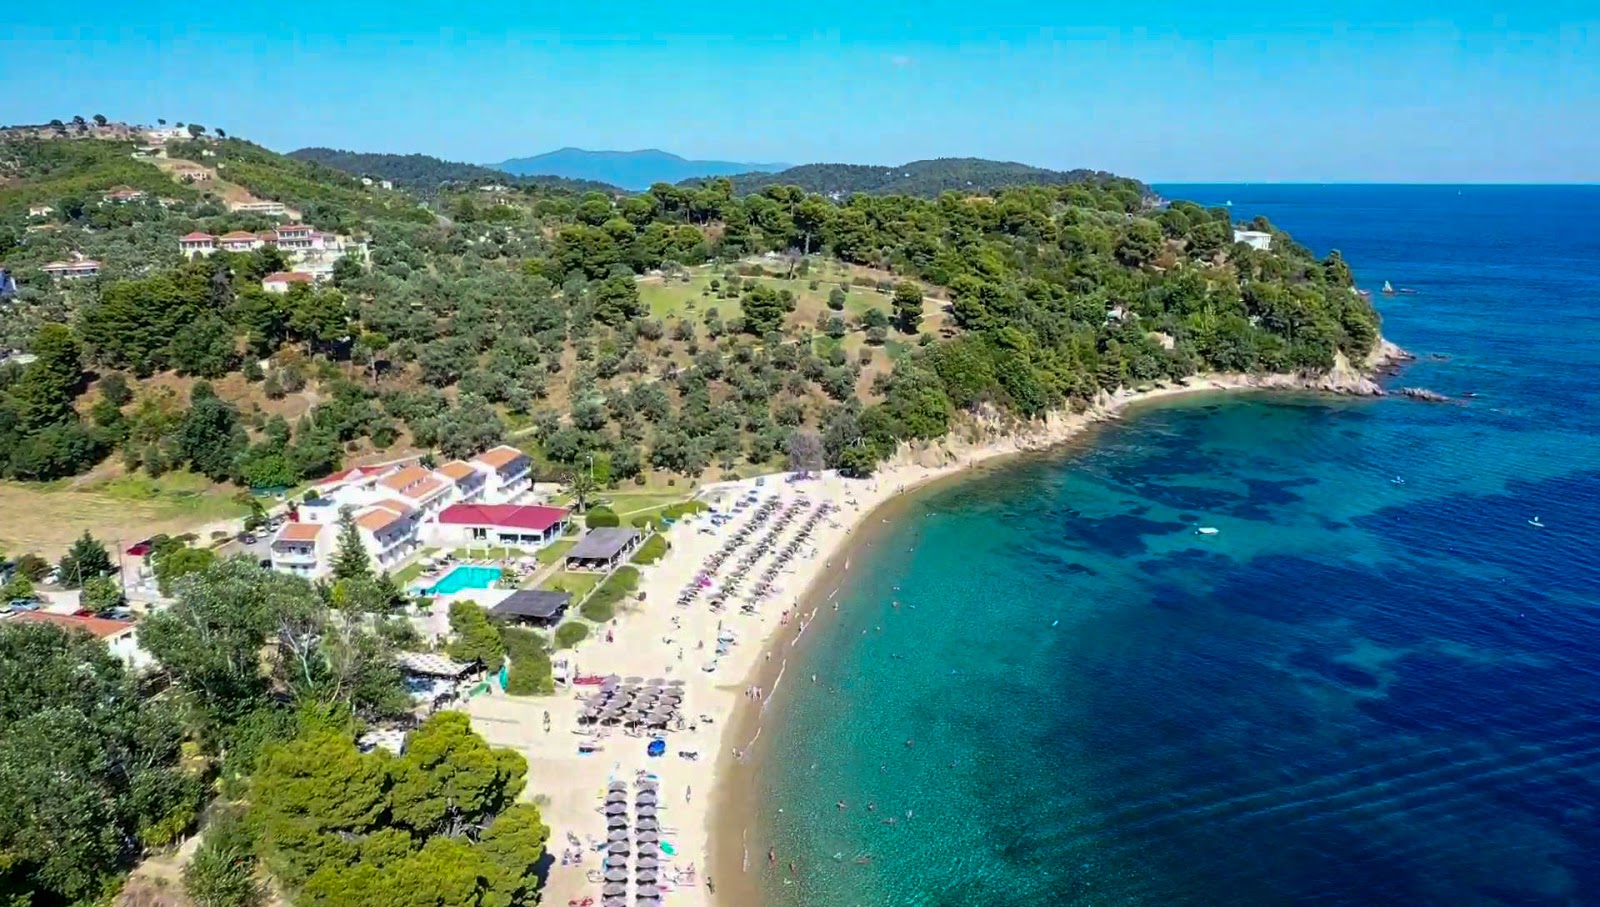 Foto de Troulos beach - lugar popular entre os apreciadores de relaxamento